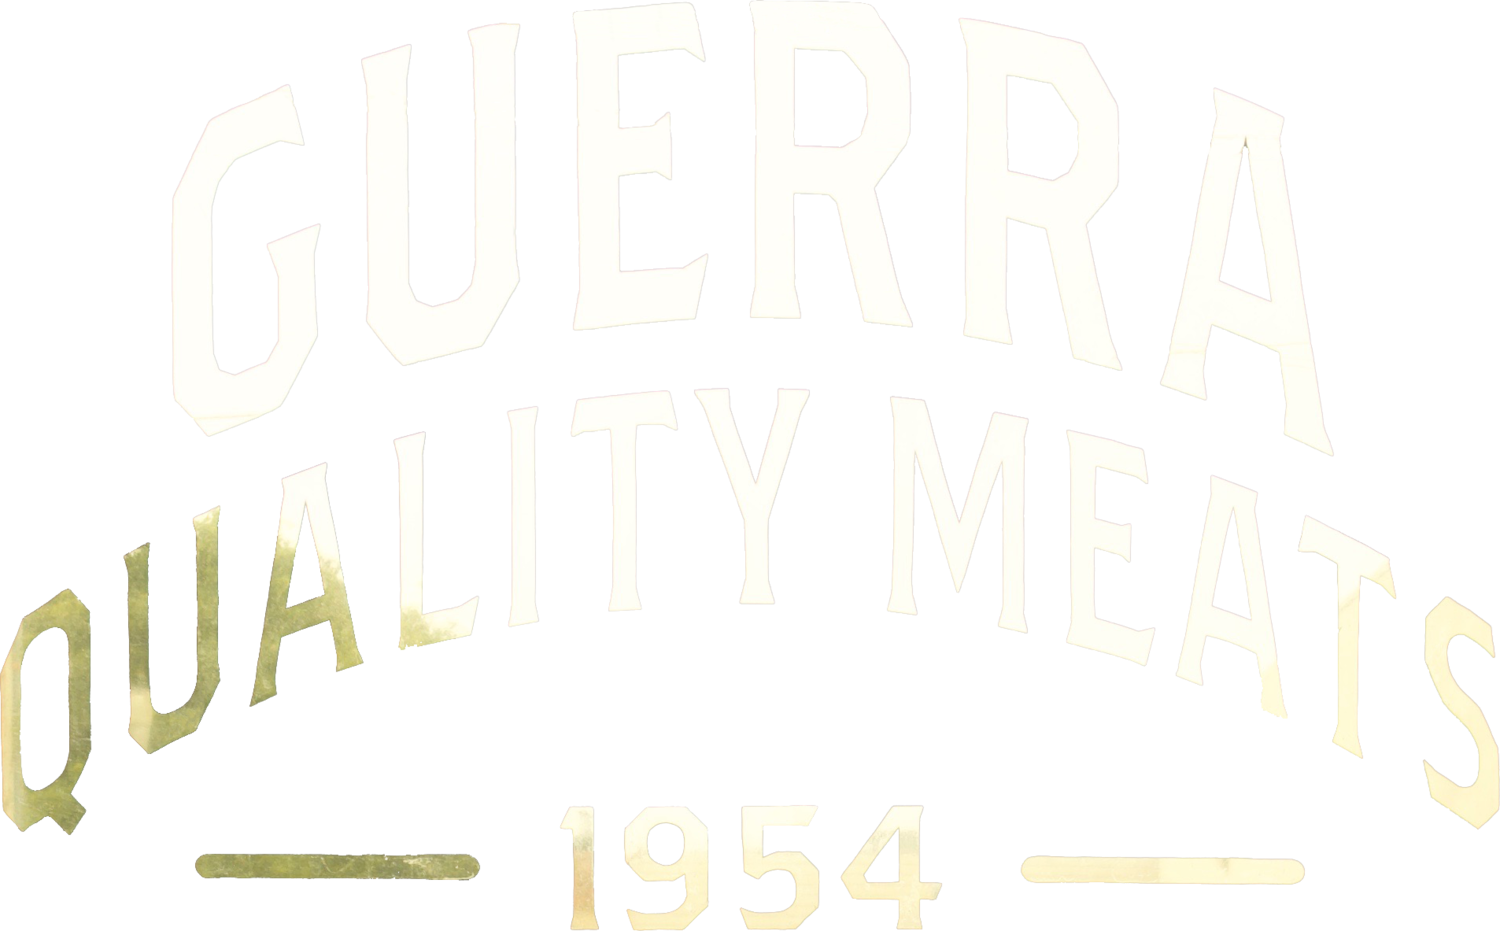 Guerra Quality Meats